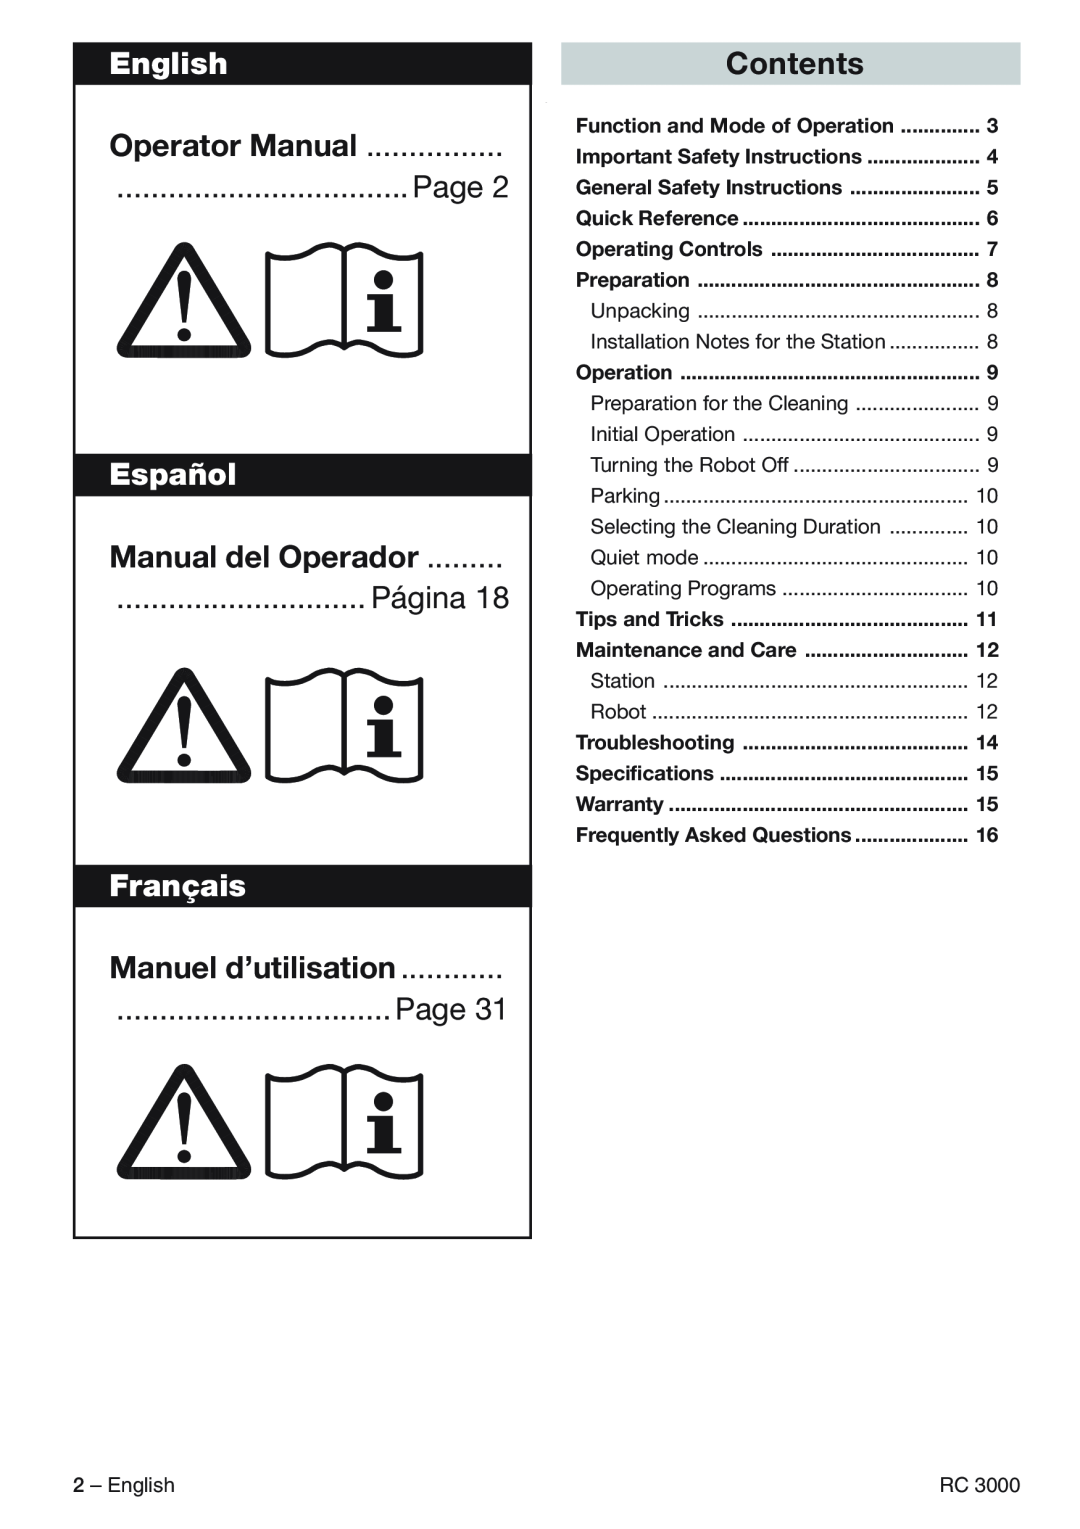 Karcher RC 3000 manual English, Operator Manual, Page, Español, Manual del Operador, Página, Français, Manuel d’utilisation 